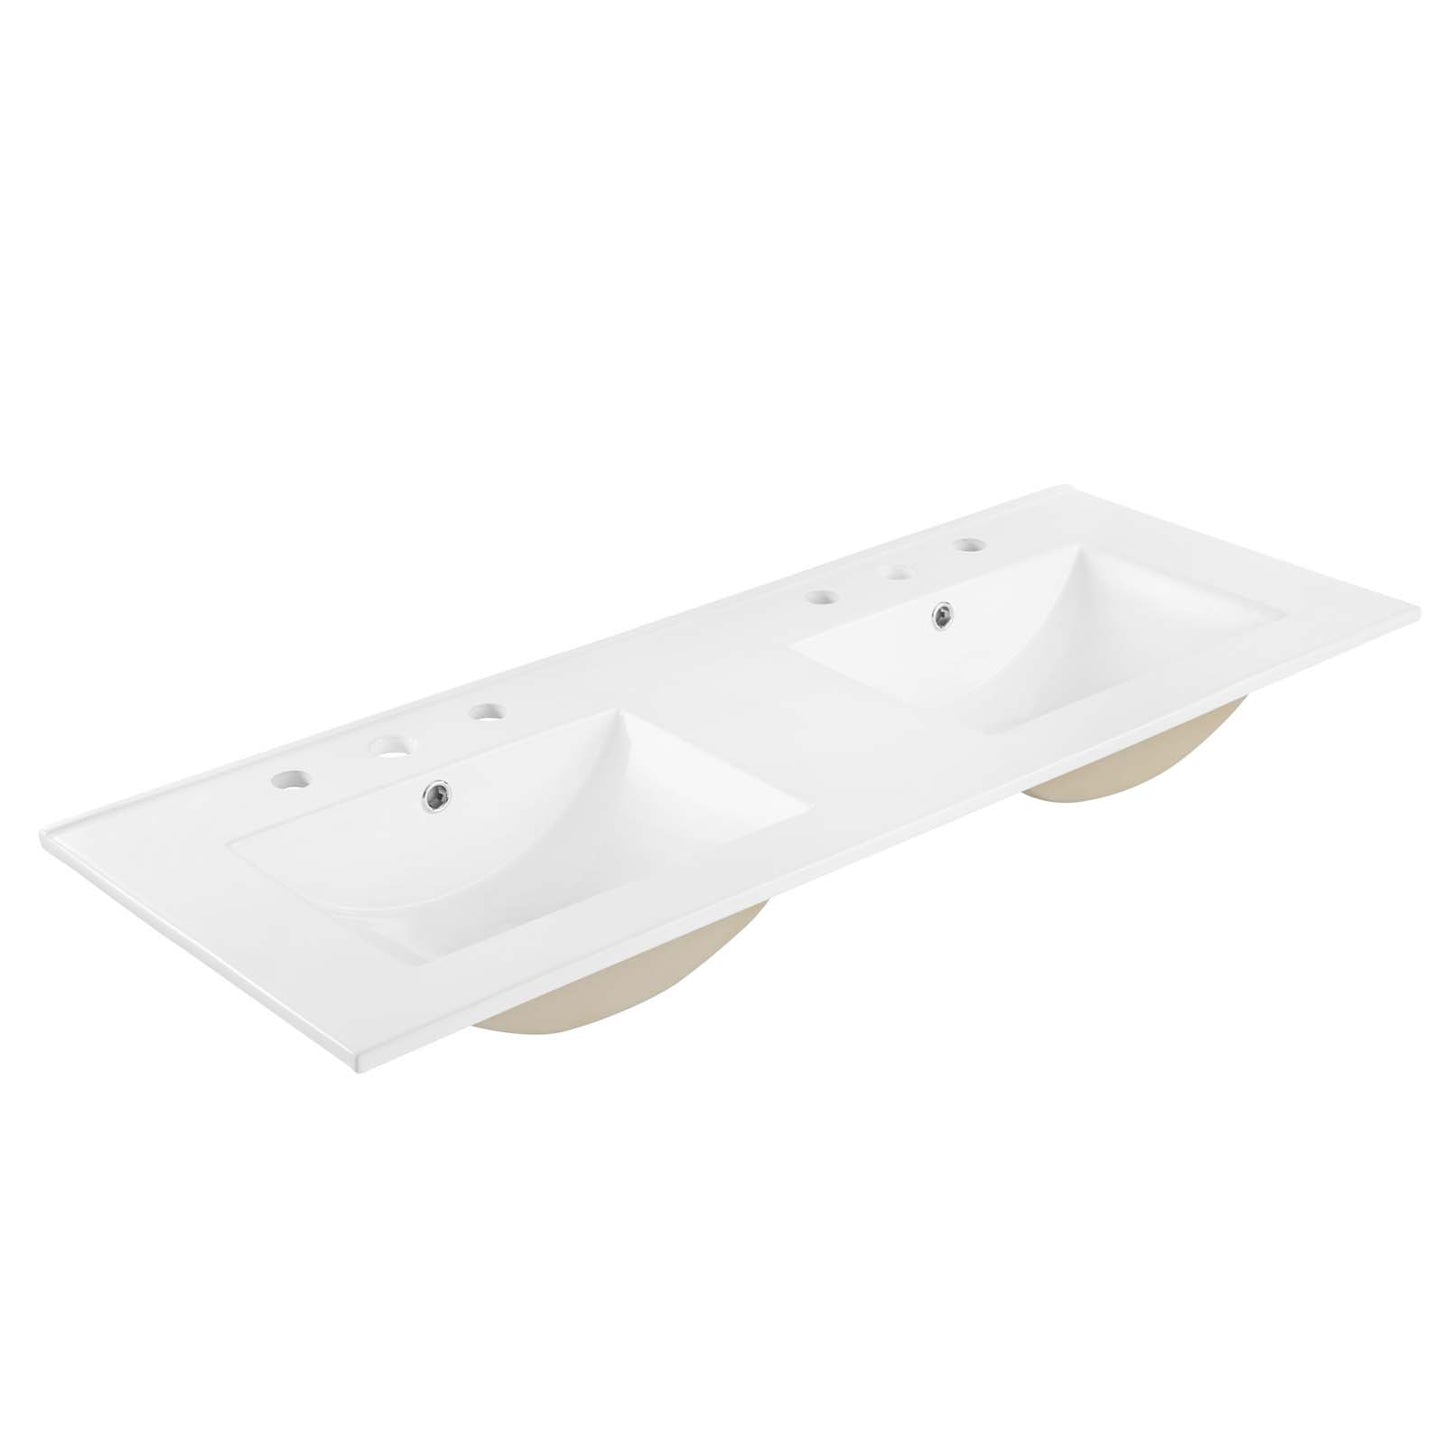 Elysian 48" Wood Double Sink Bathroom Vanity By Modway - EEI-6456 | Bathroom Accessories | Modway - 9